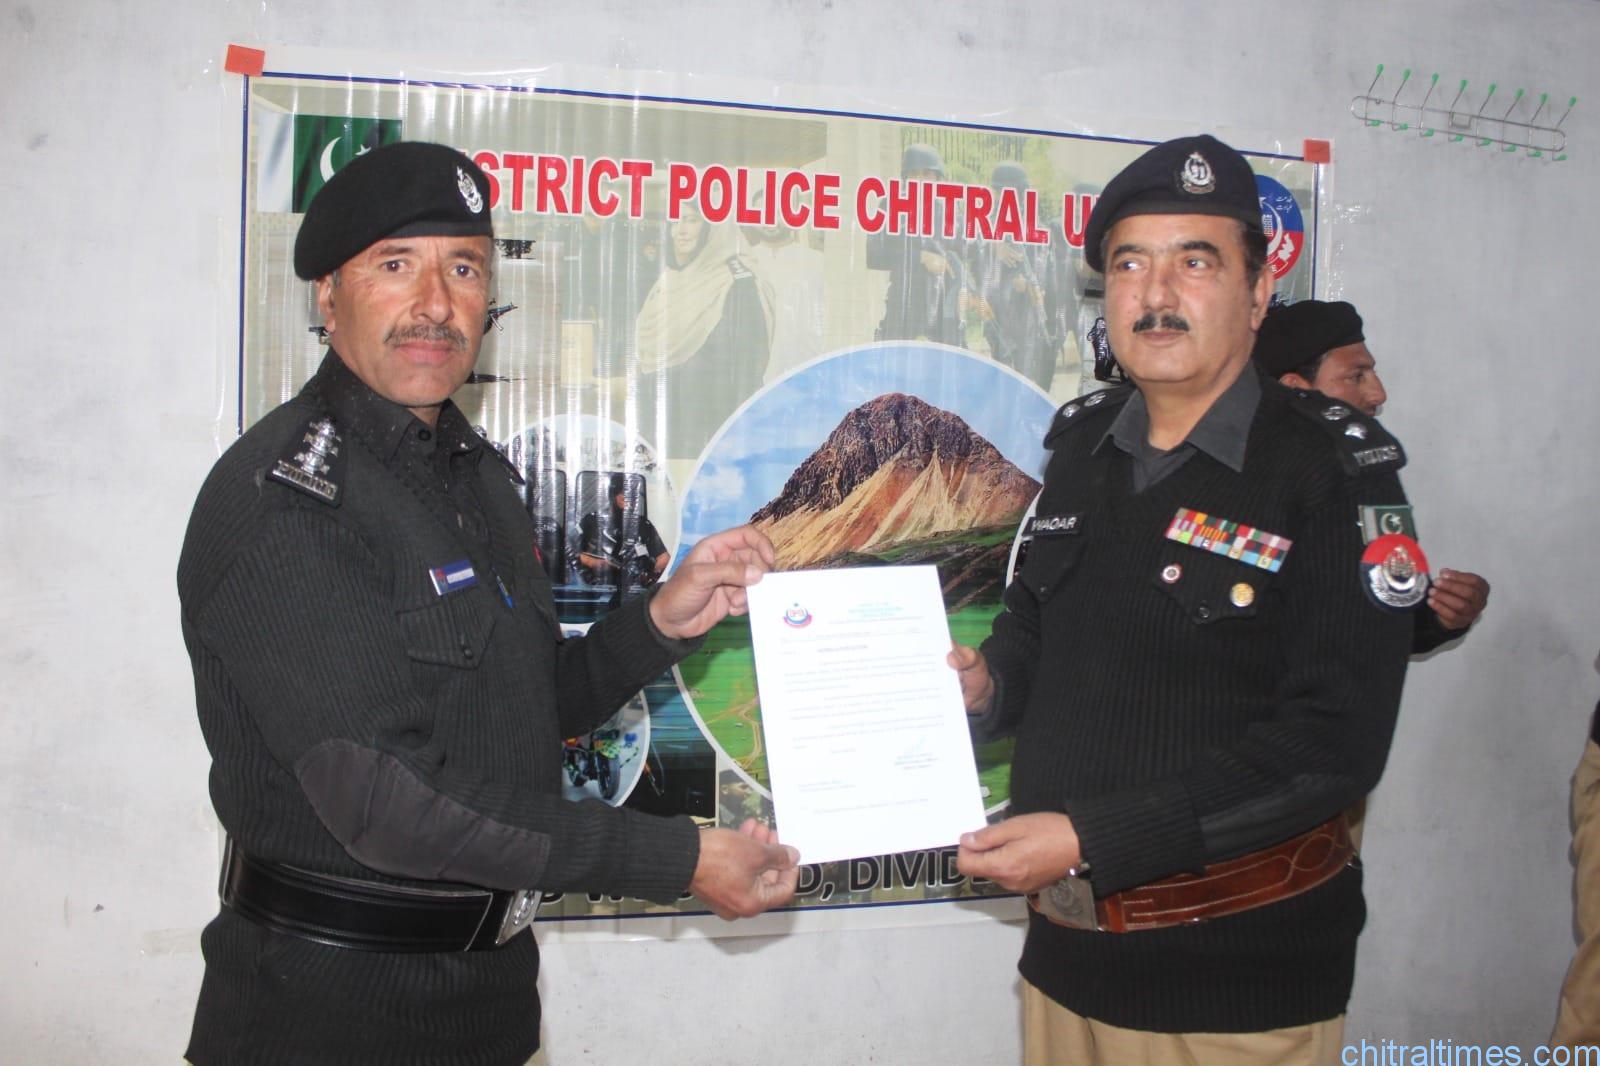 Police upper chitral 2